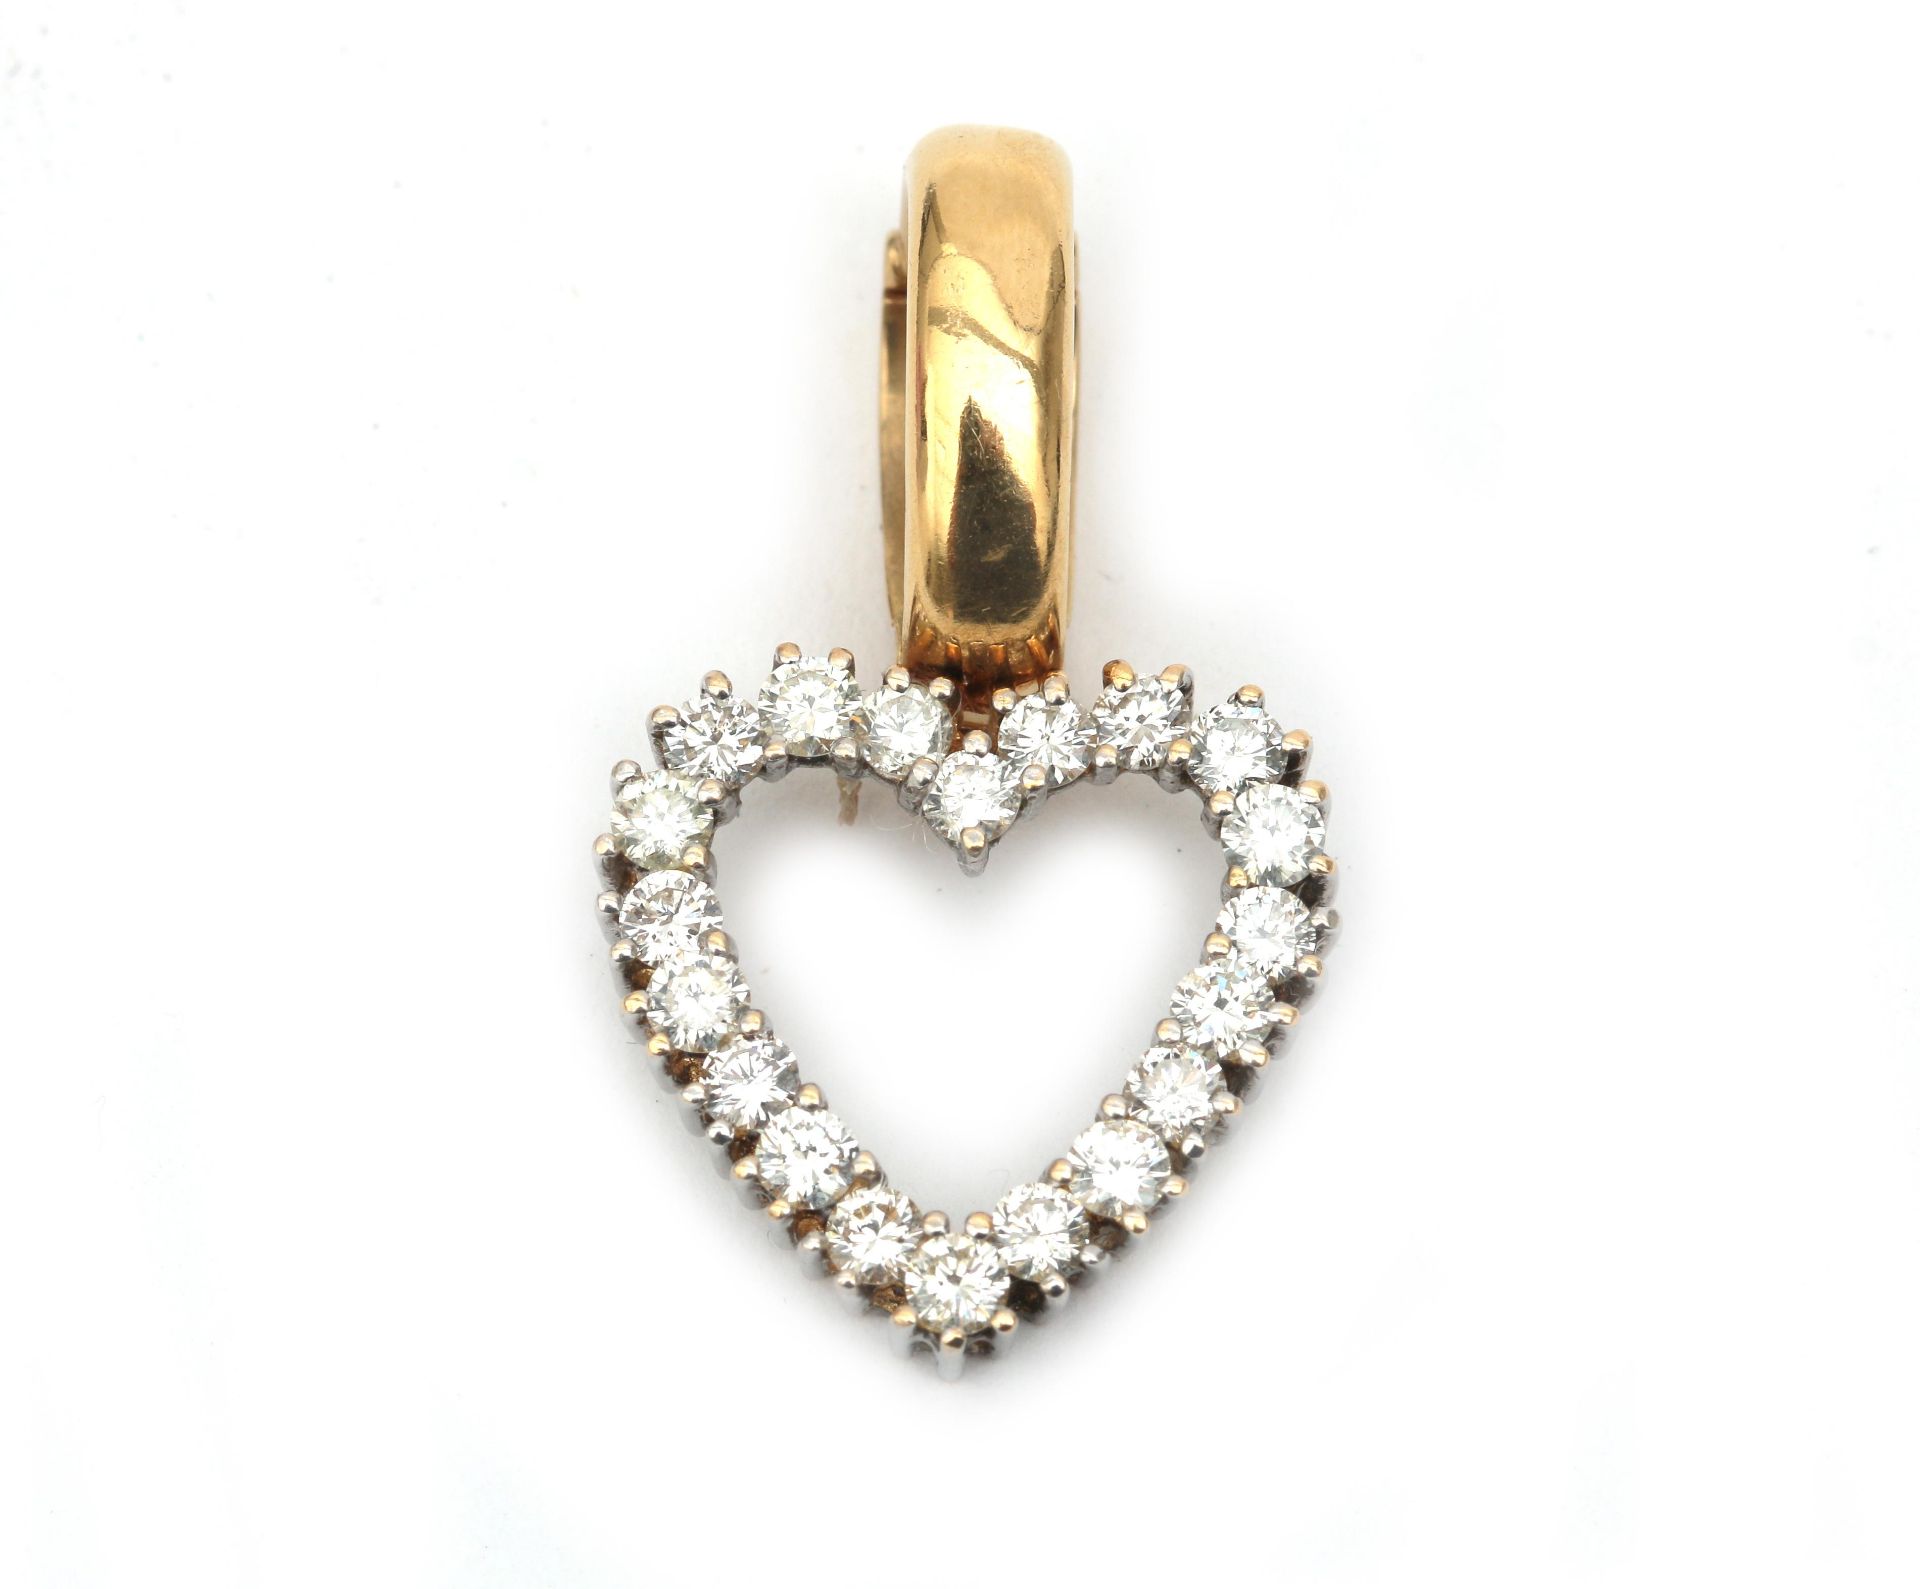 A 14 karat gold diamond set heart shaped pendant. Featuring twenty brilliant cut diamonds, ca. 1.